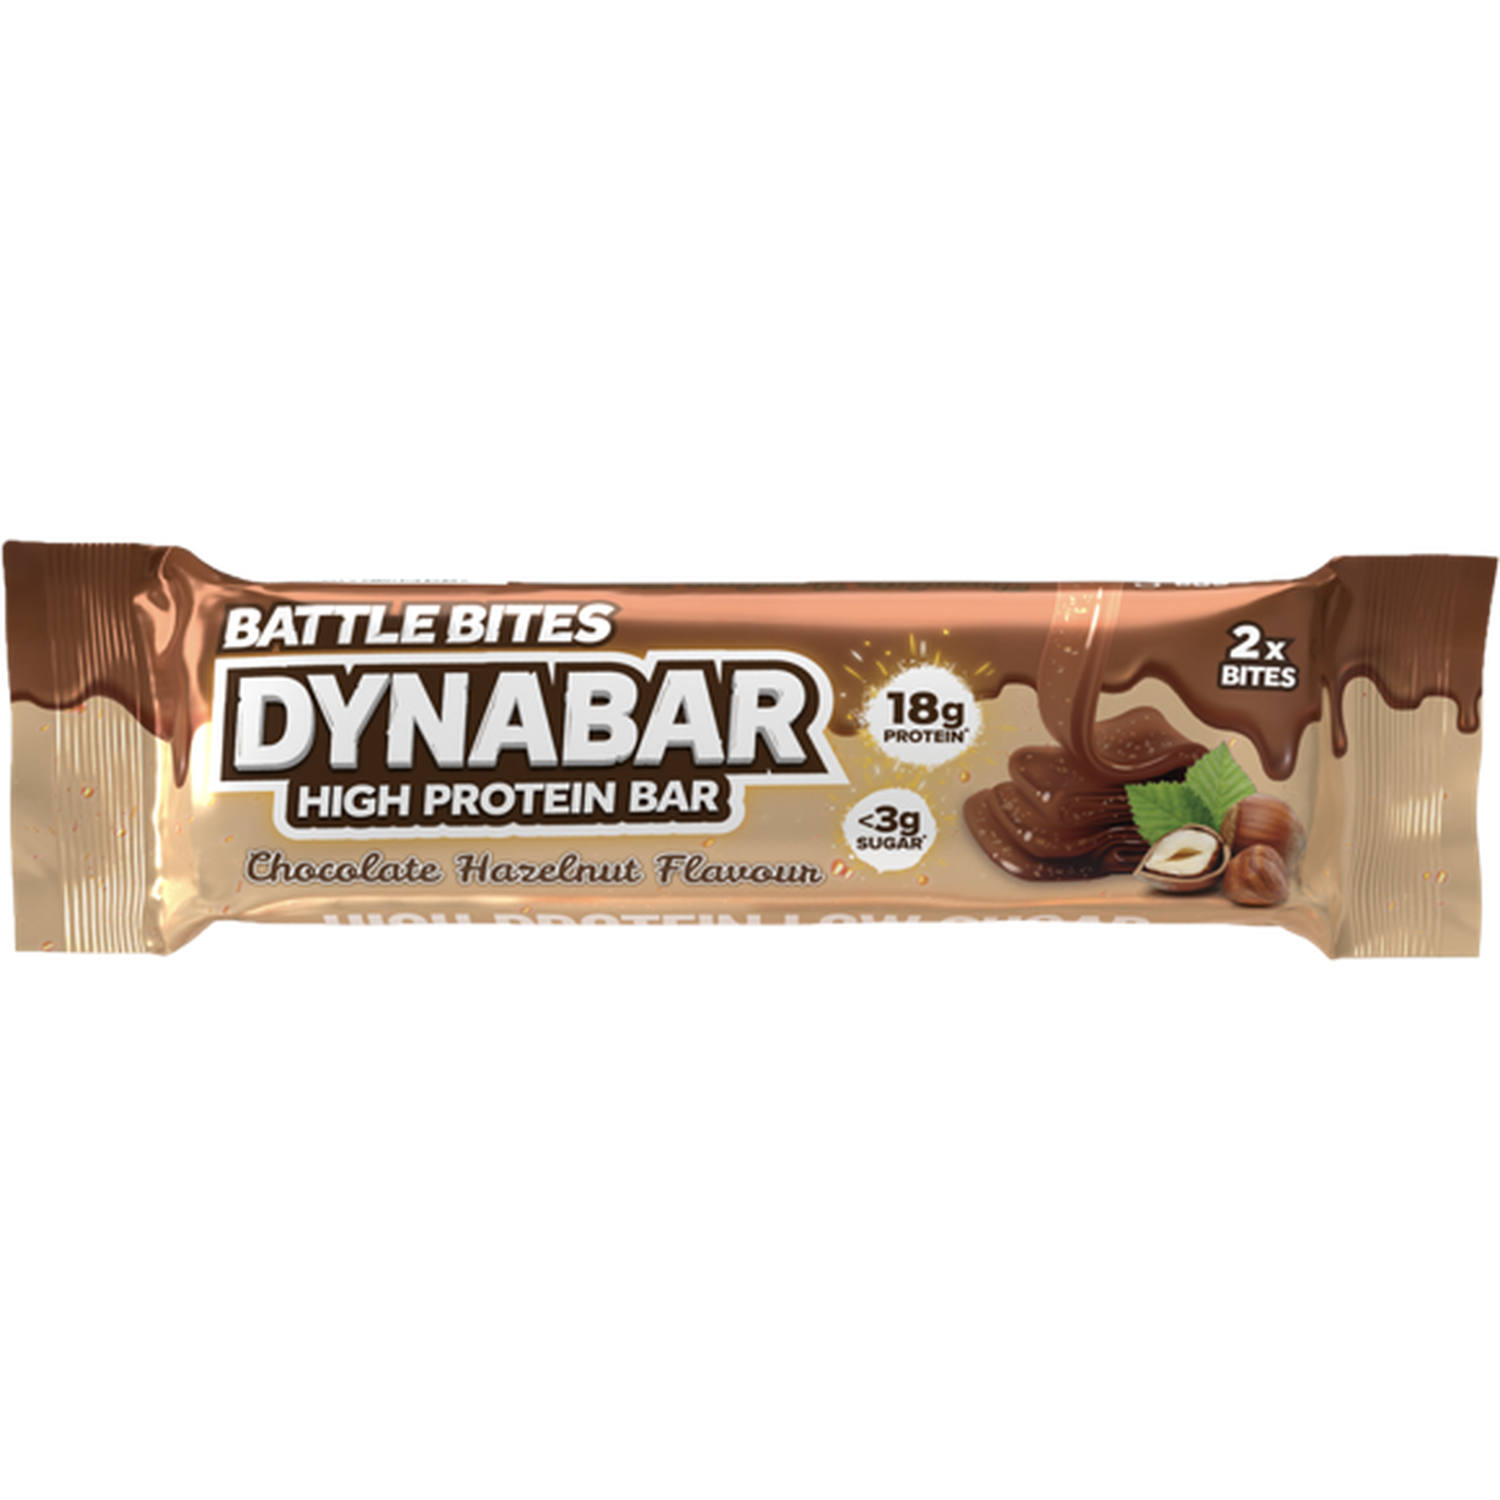 Battle Bites Chocolate Hazelnut DynaBar - Brown Image